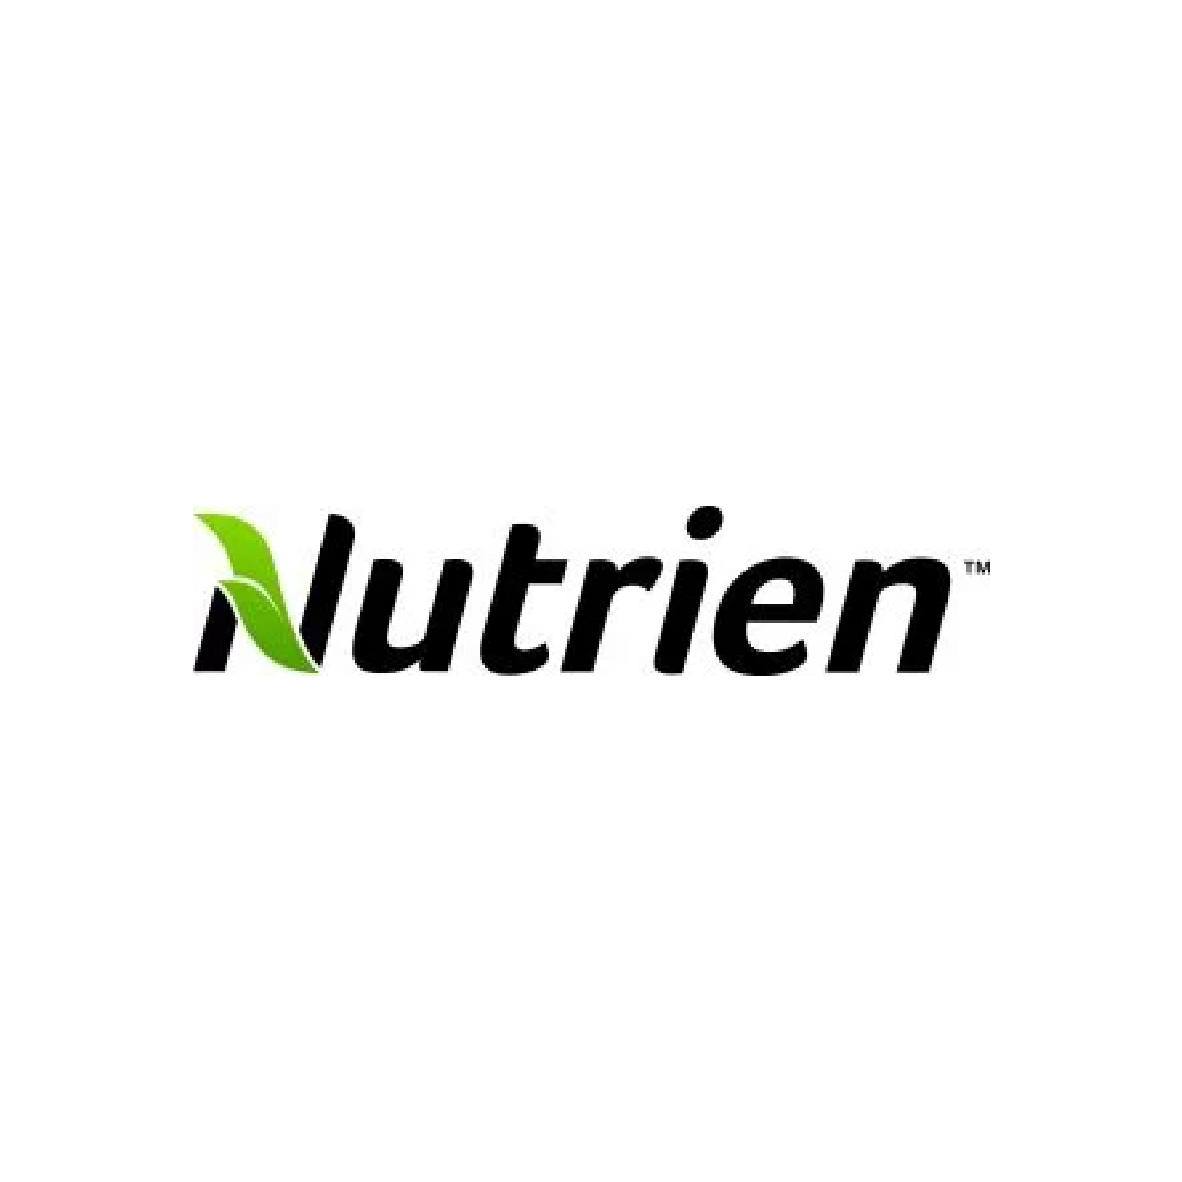  Nutrien logo 